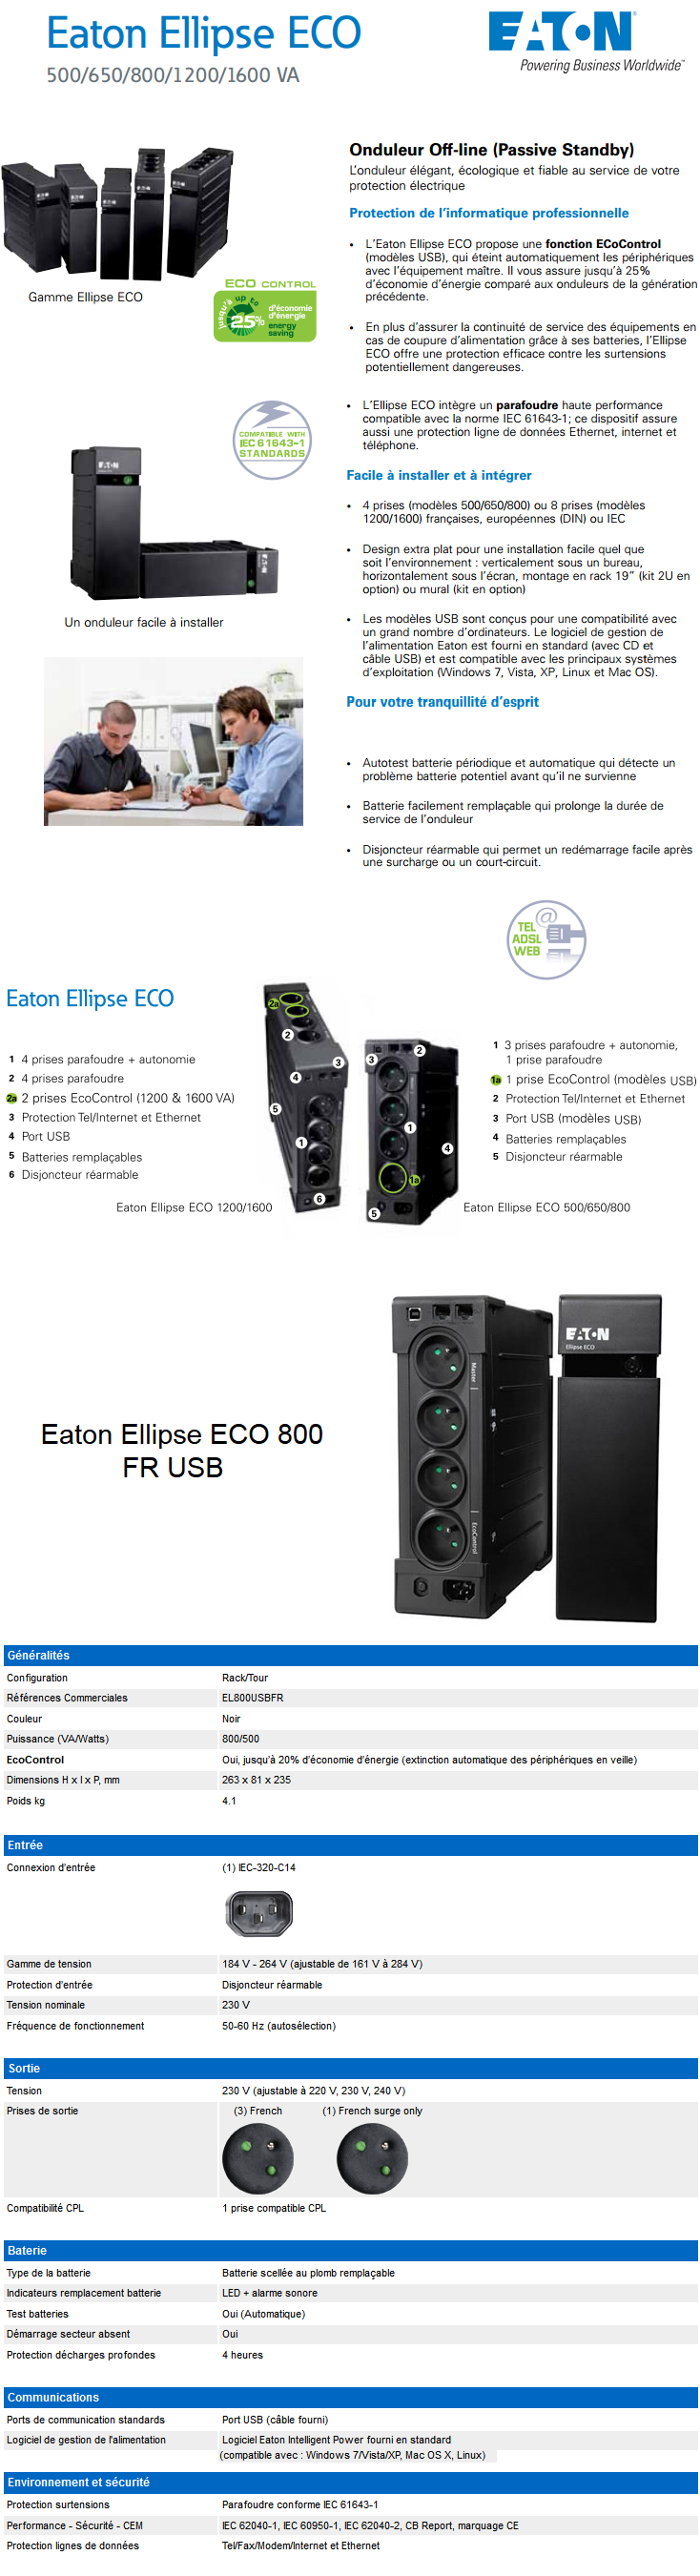 Acheter Onduleur OFF-Line Eaton Ellipse ECO 800 USB FR (EL800USBFR) maroc